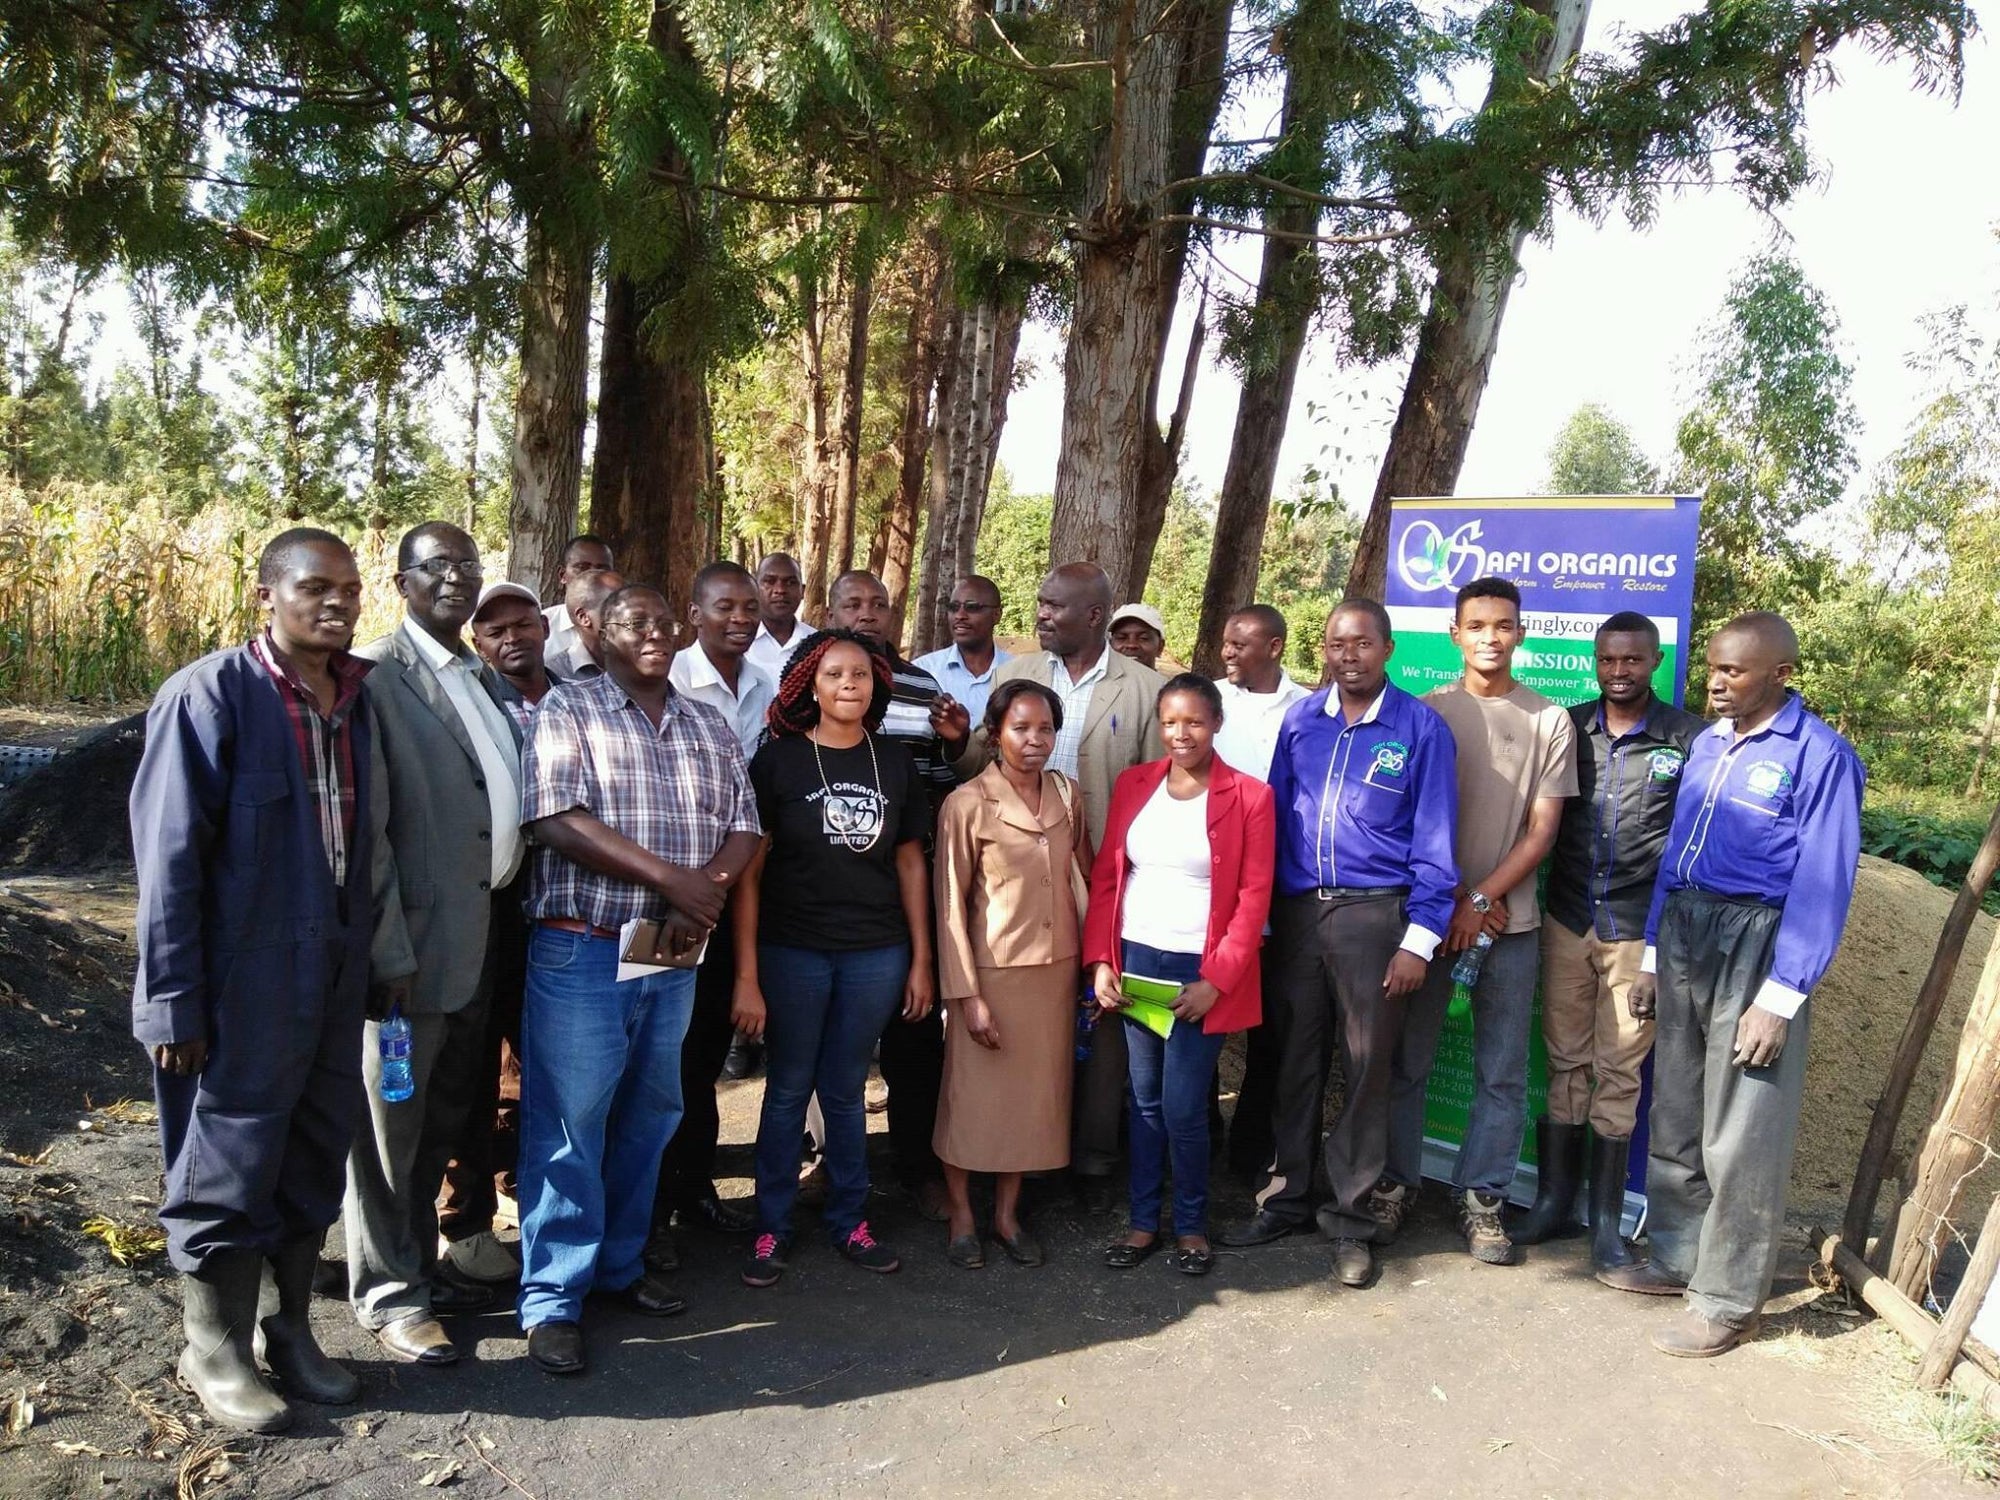 Meet Safi Organics: Changing Lives In Kenya with Carbon Negative Fertilizers